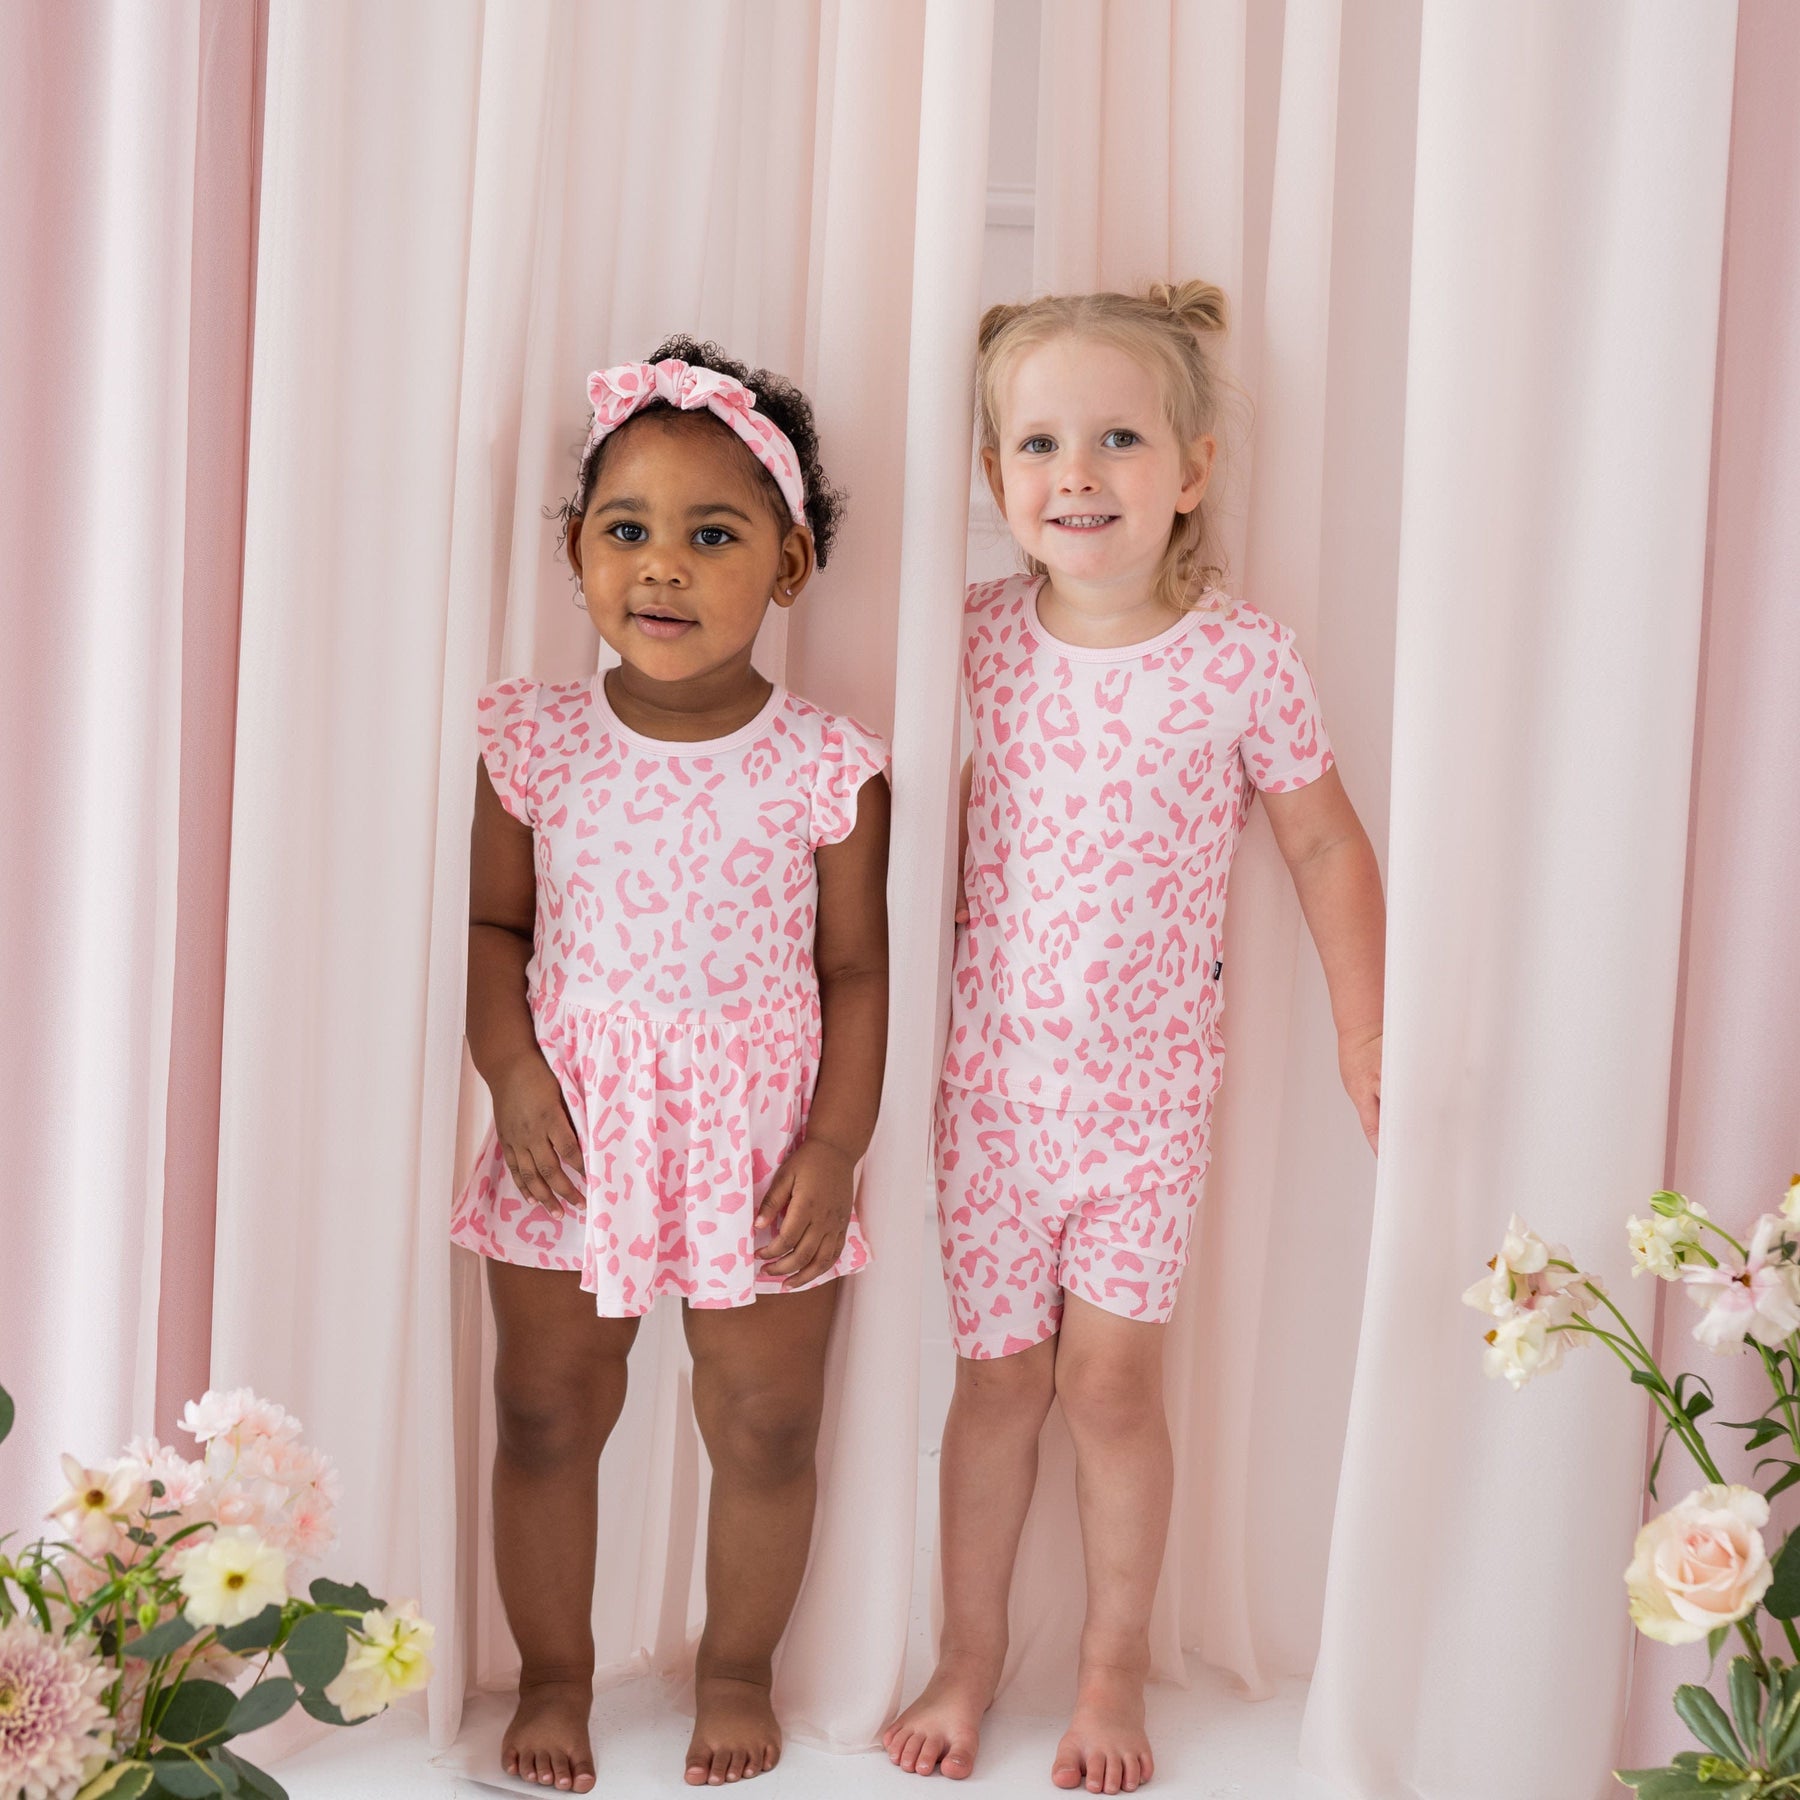 Kyte Baby Short Sleeve Toddler Pajama Set Short Sleeve Pajamas in Sakura Leopard